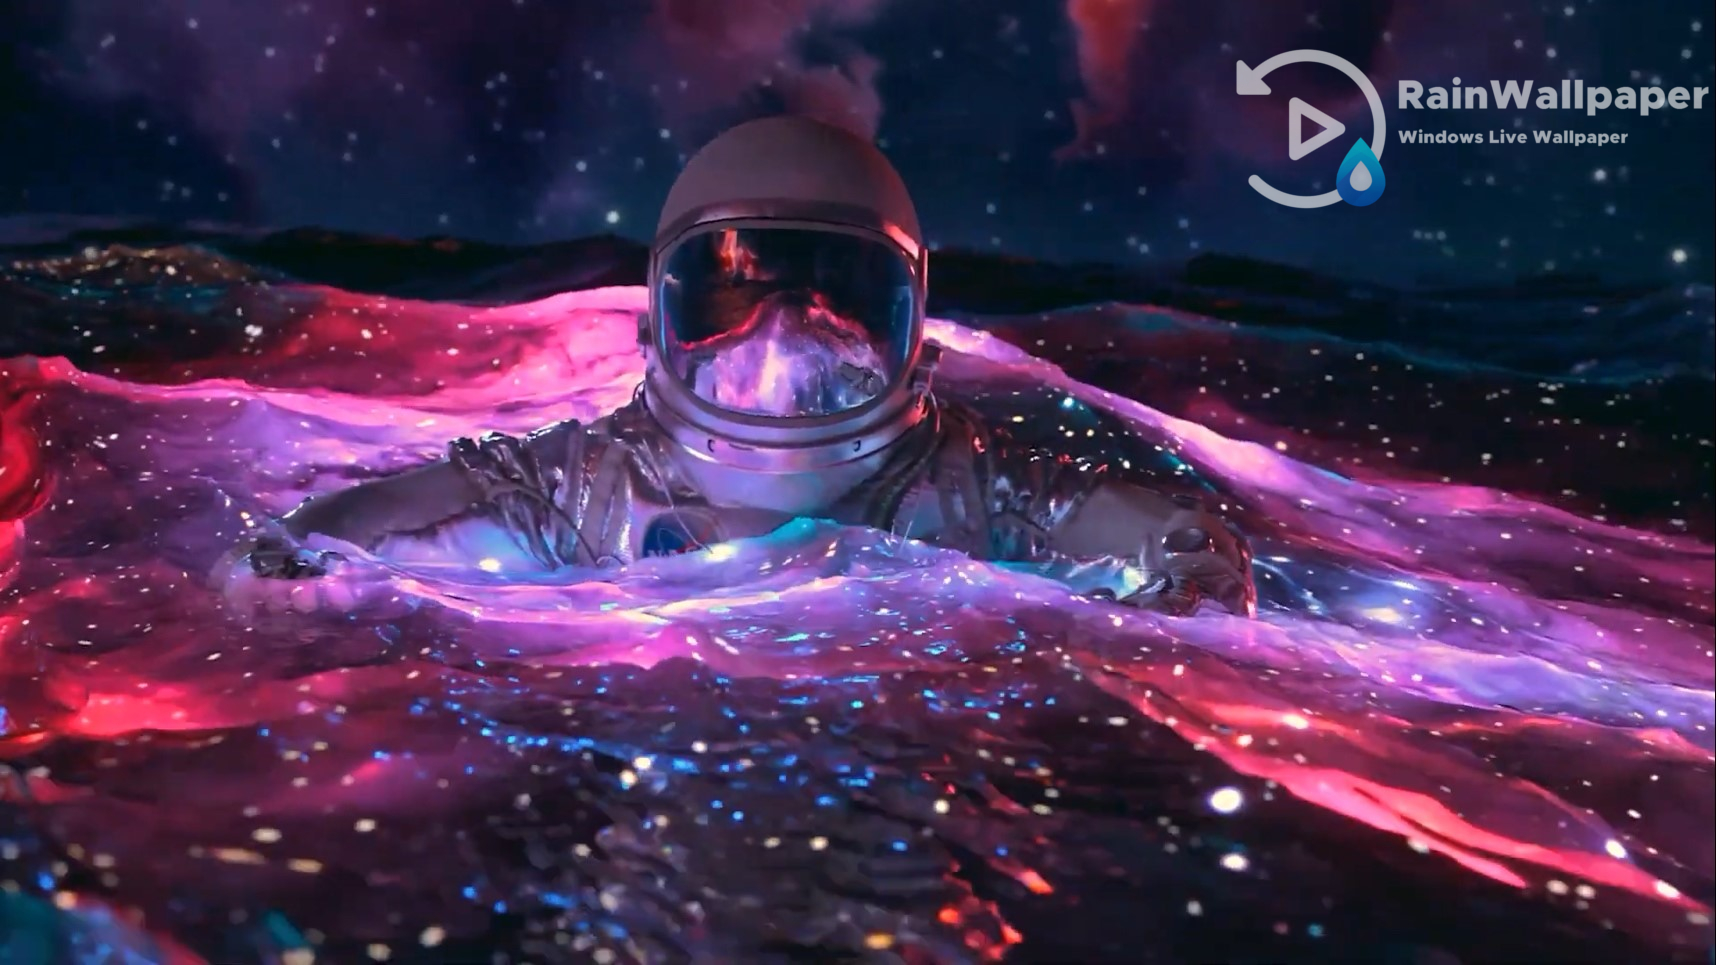 Astronaut In the Ocean Live wallpaper by Jimking on DeviantArt